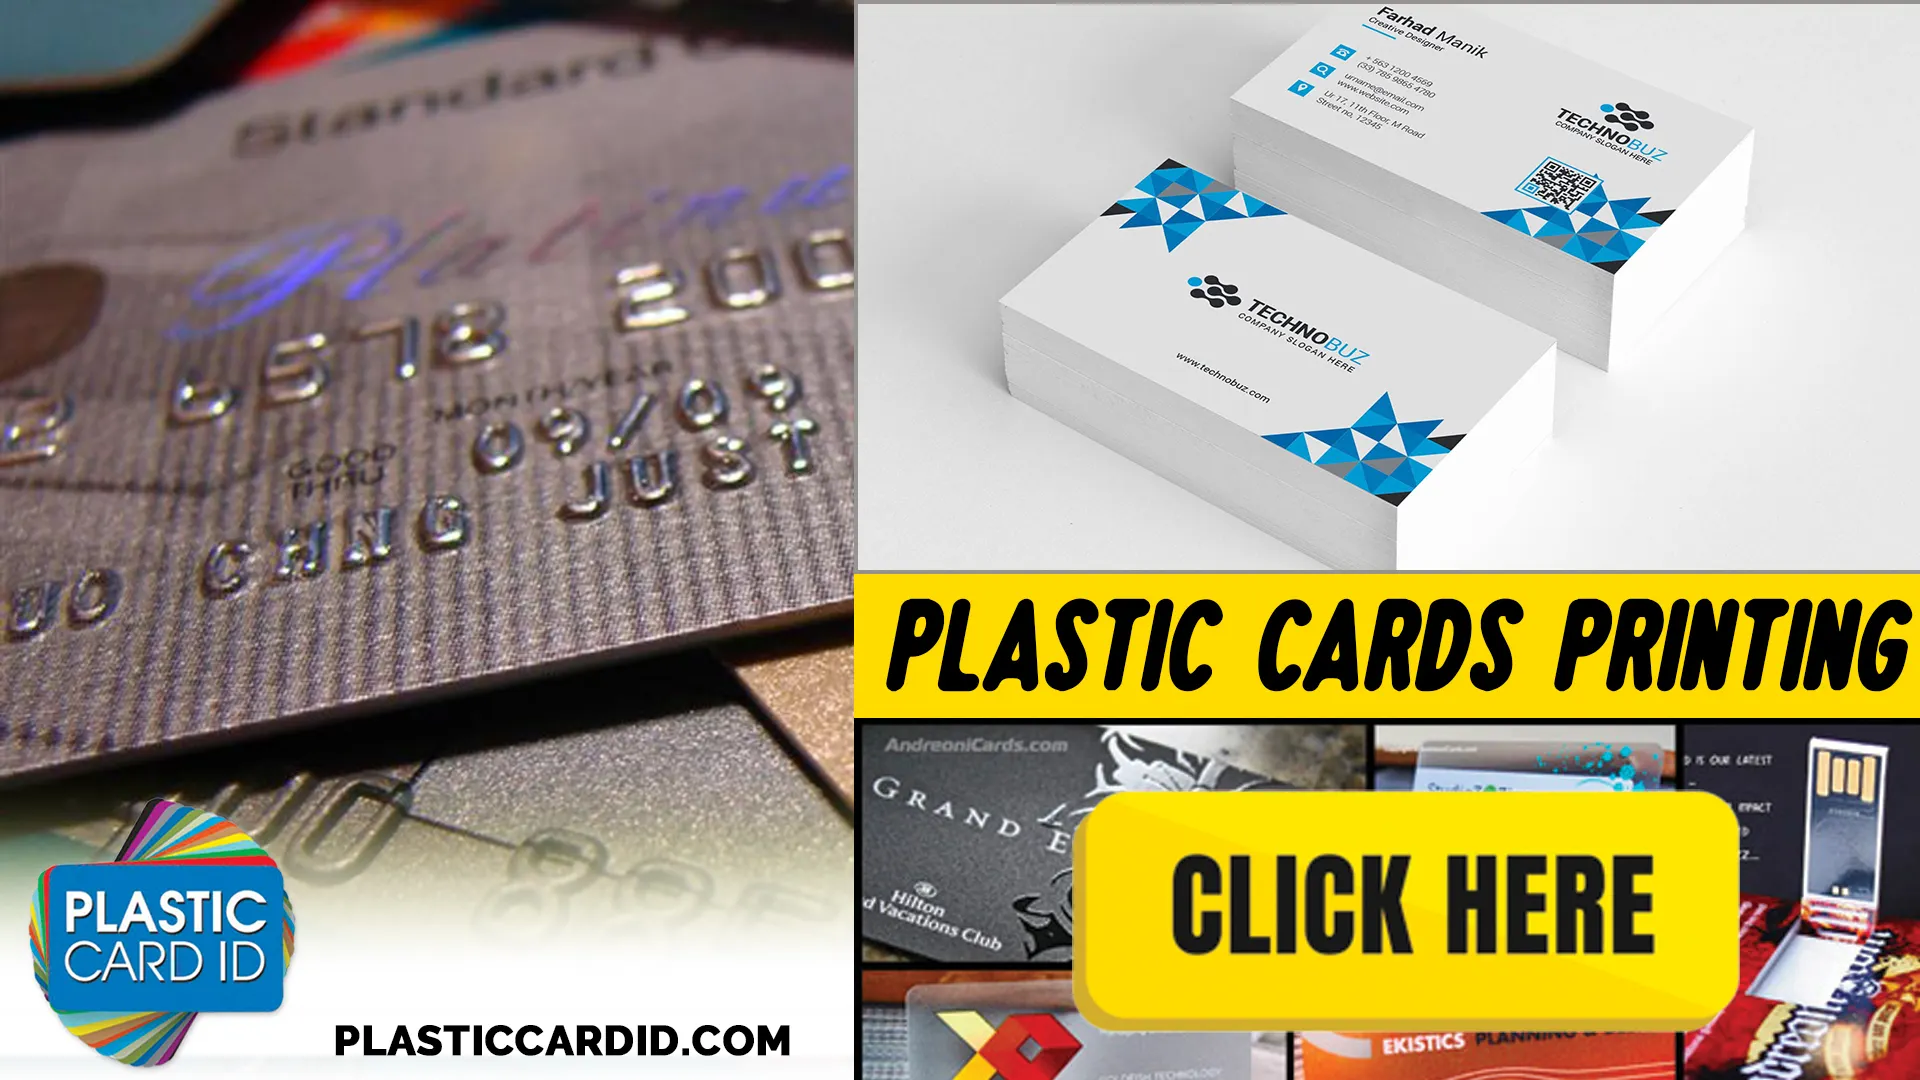 Your Trustworthy Source  Plastic Card ID
